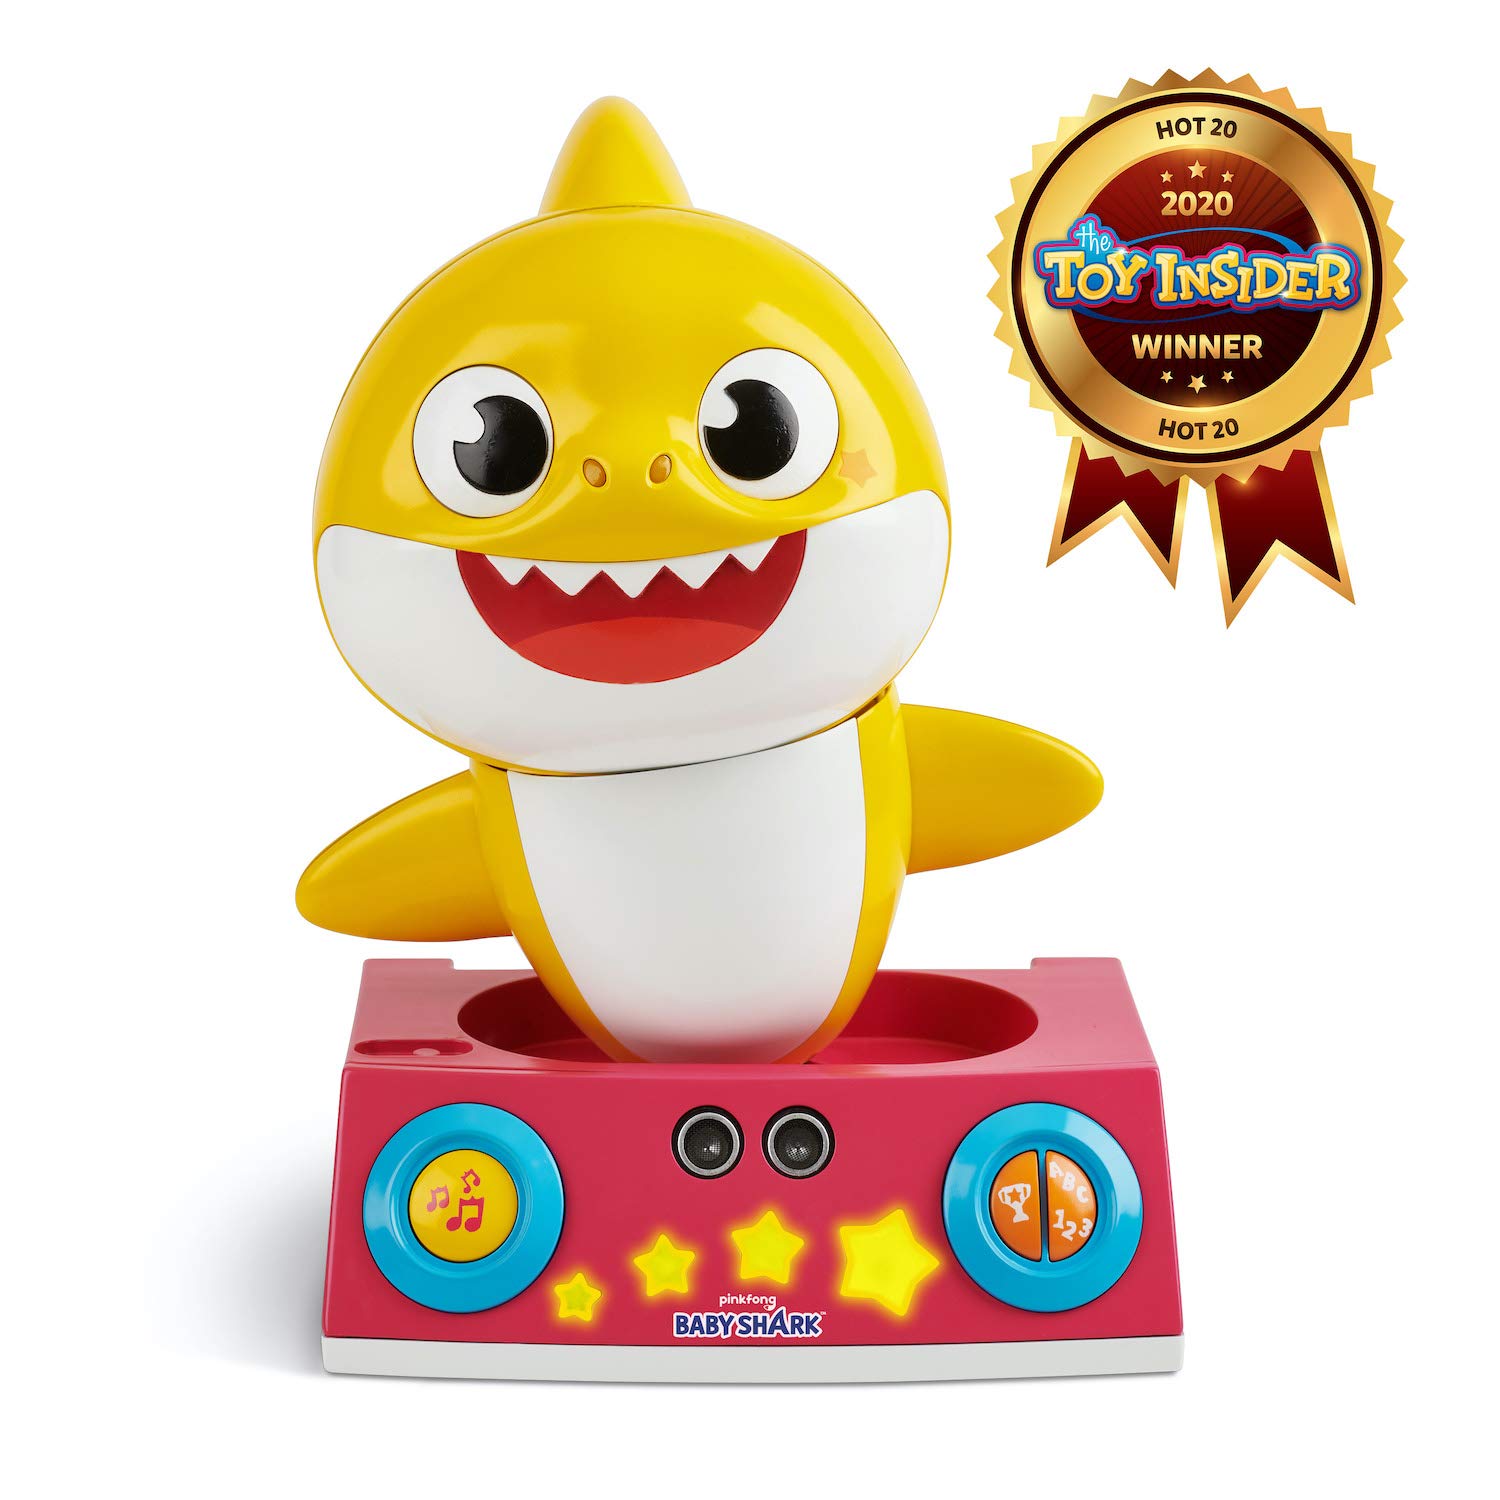 WowWee Pinkfong Baby Shark Official - Baby Shark Dancing DJ